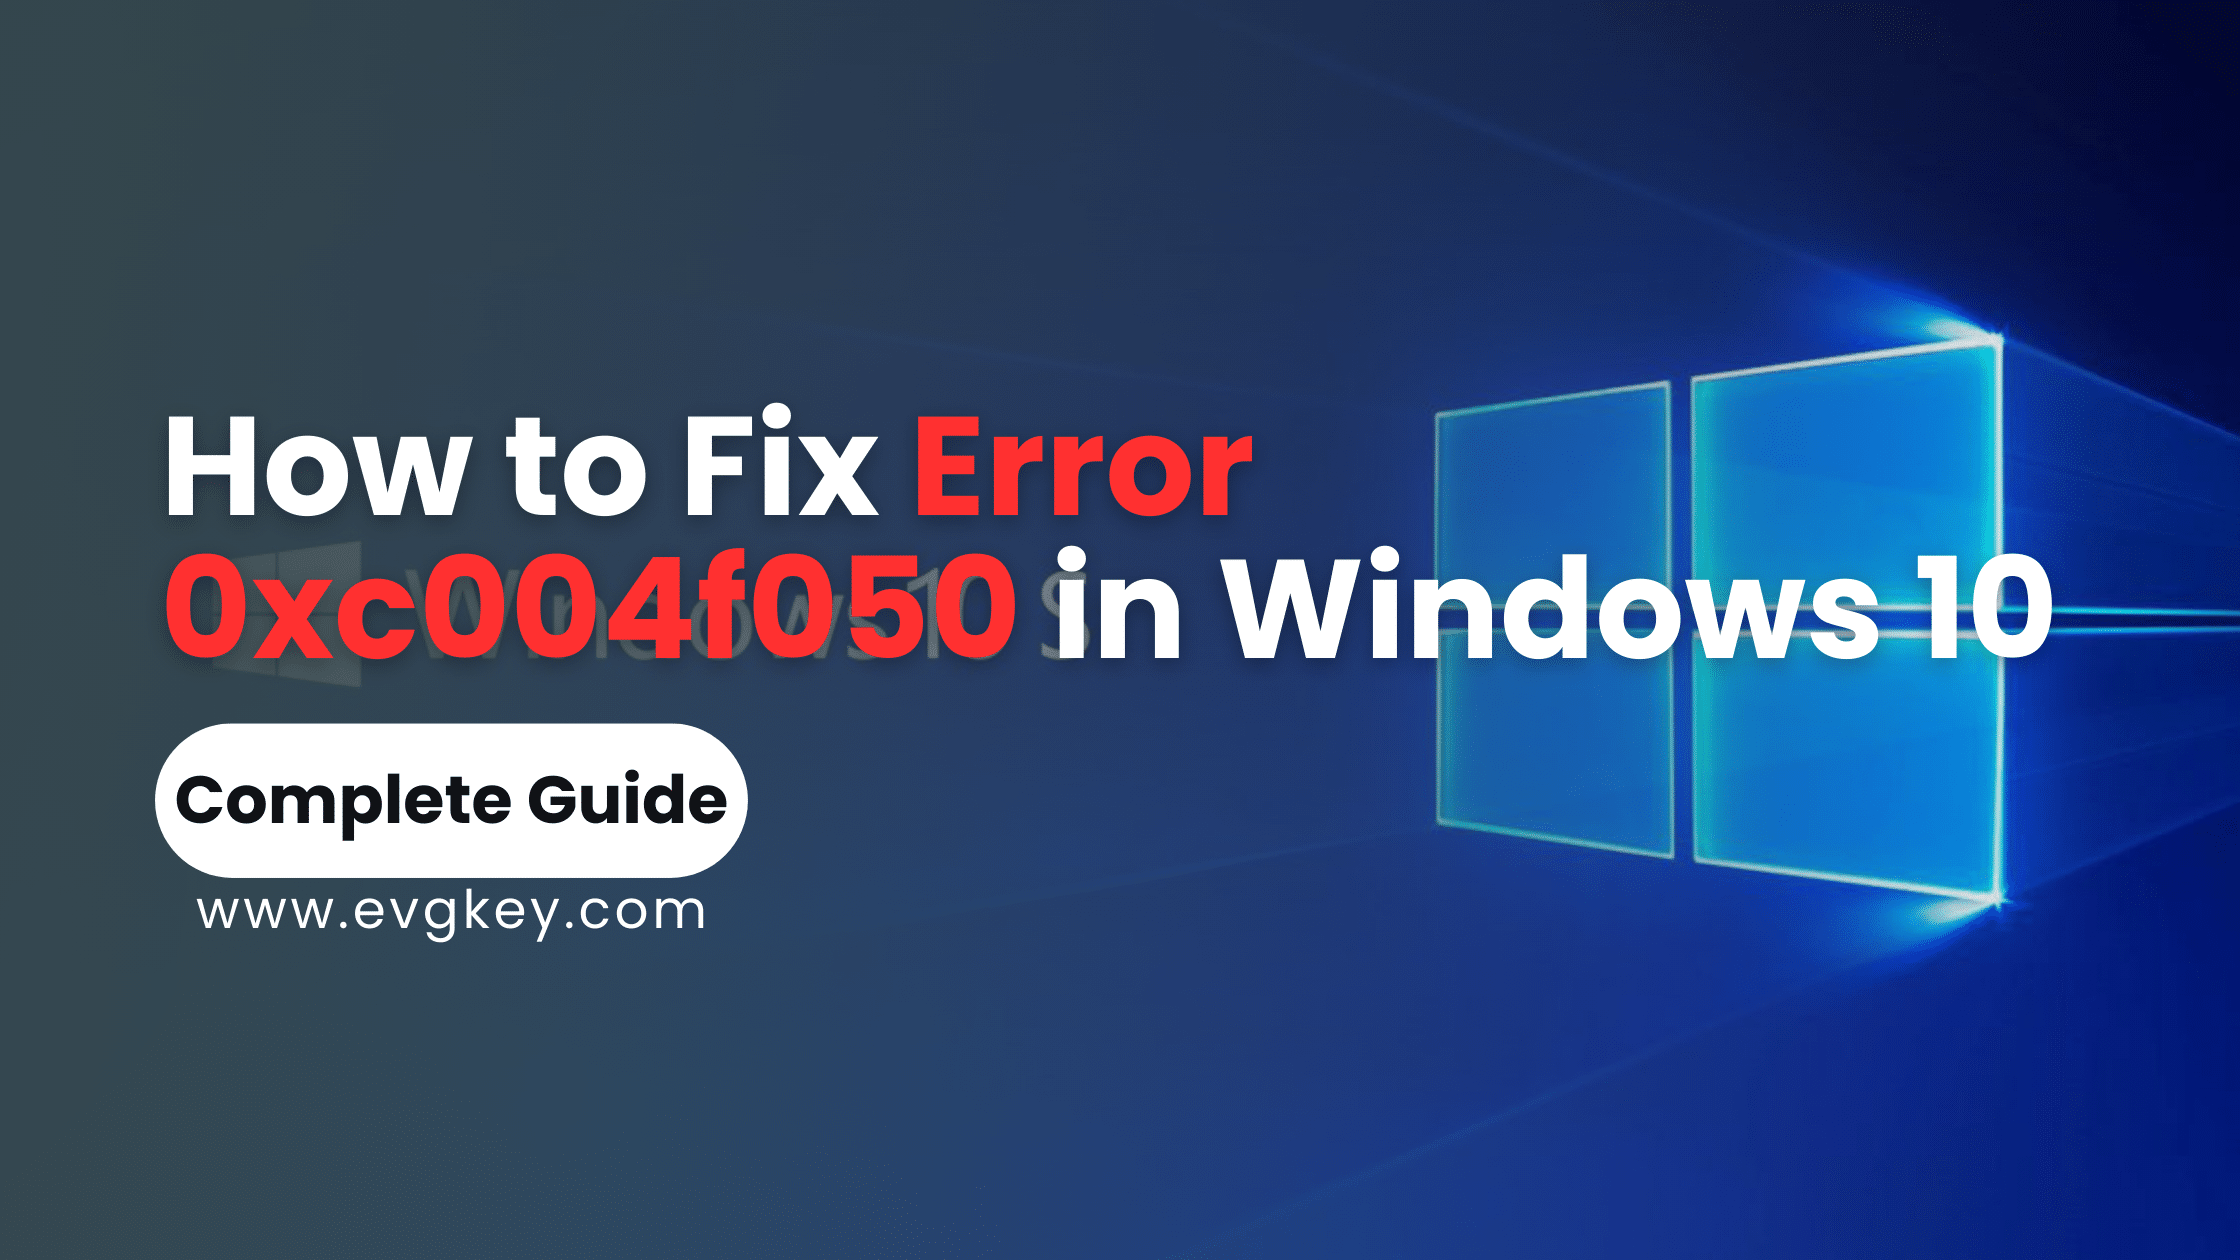 How to Fix Error 0xc004f050 in Windows 10 Windows 10 Professional with OEM Key